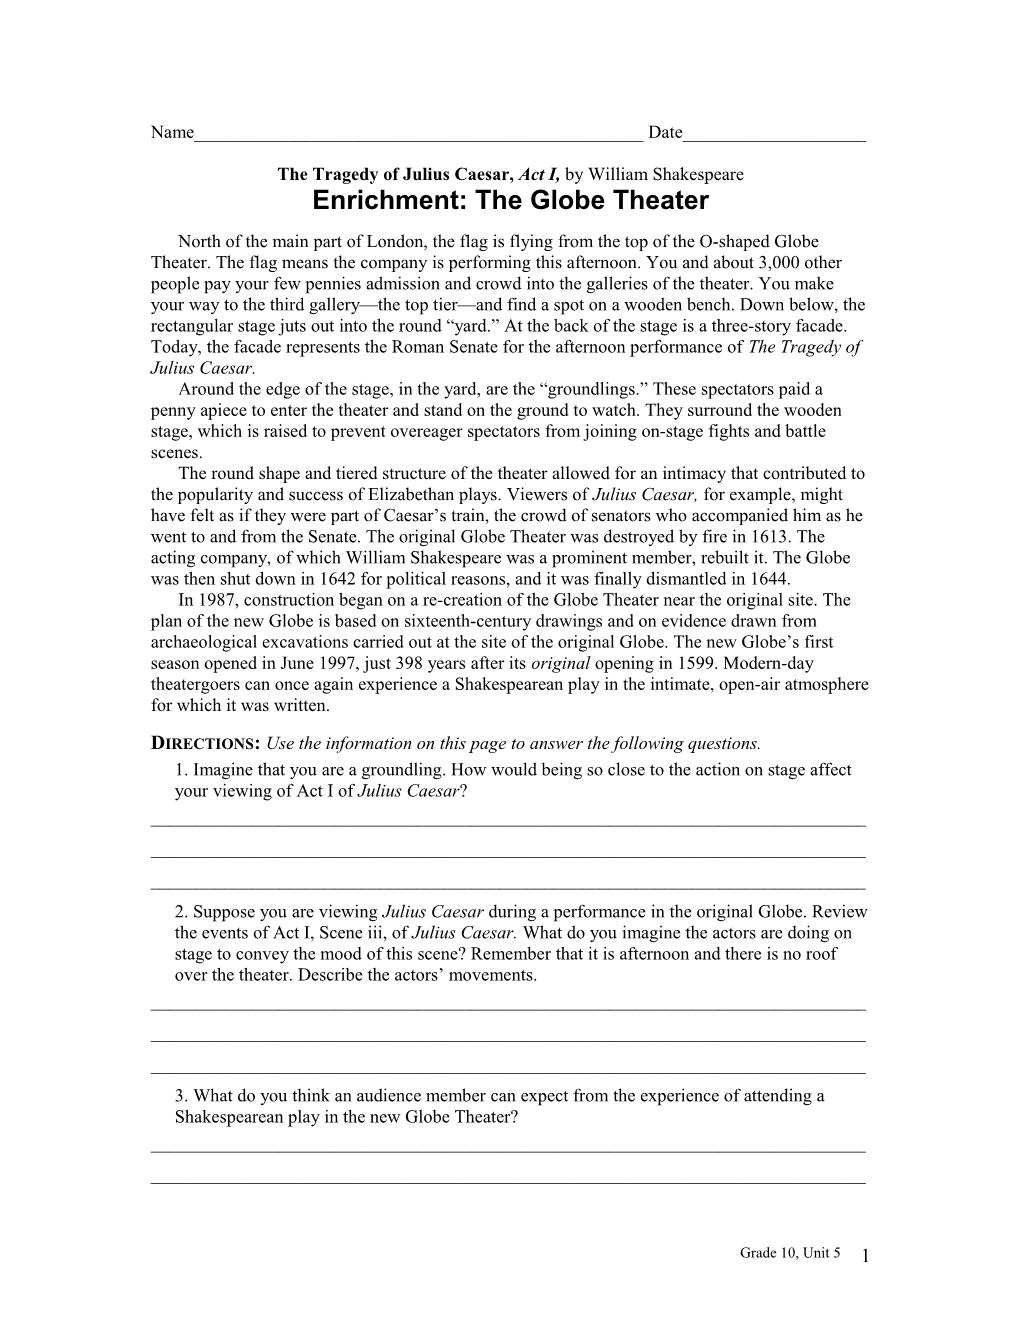 Enrichment: the Globe Theater